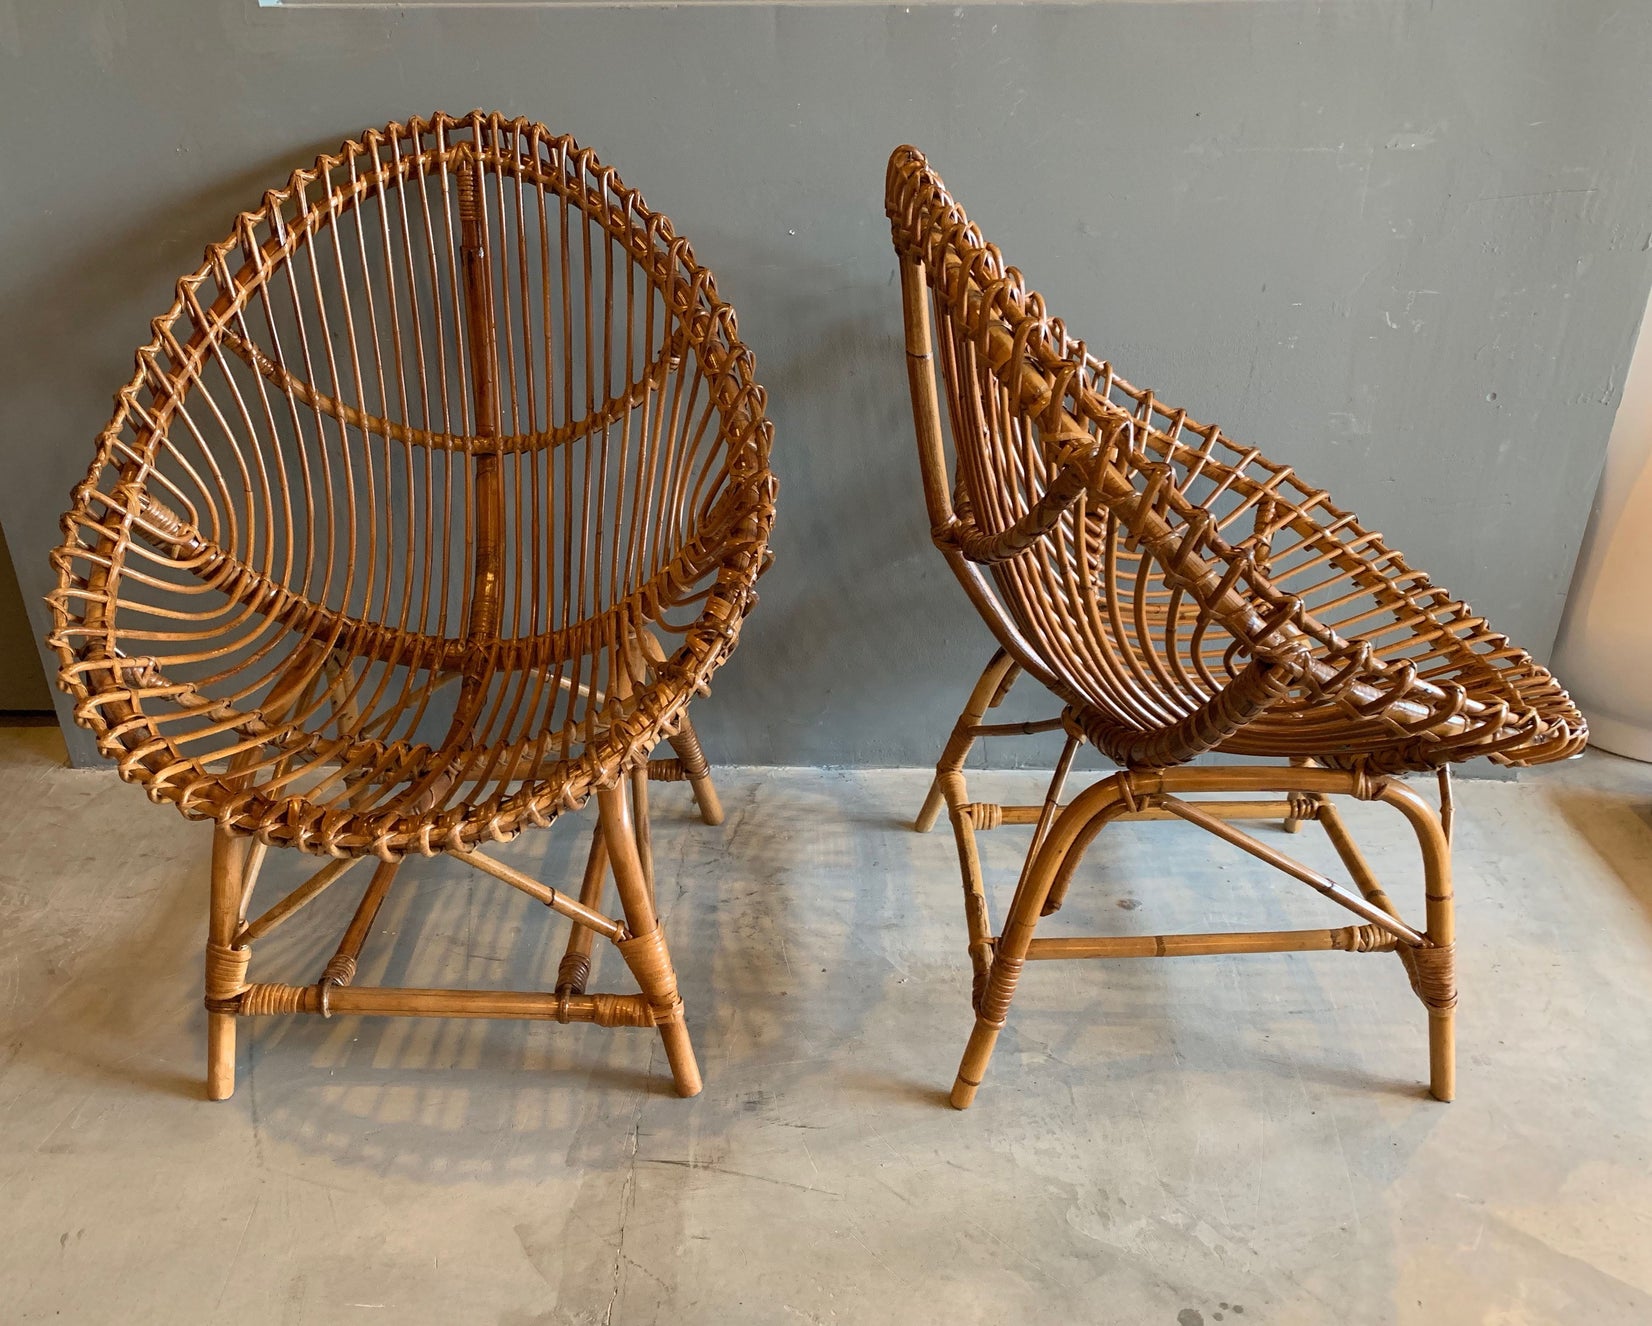 Bonacina Sculptural Chairs, 1950s Italy